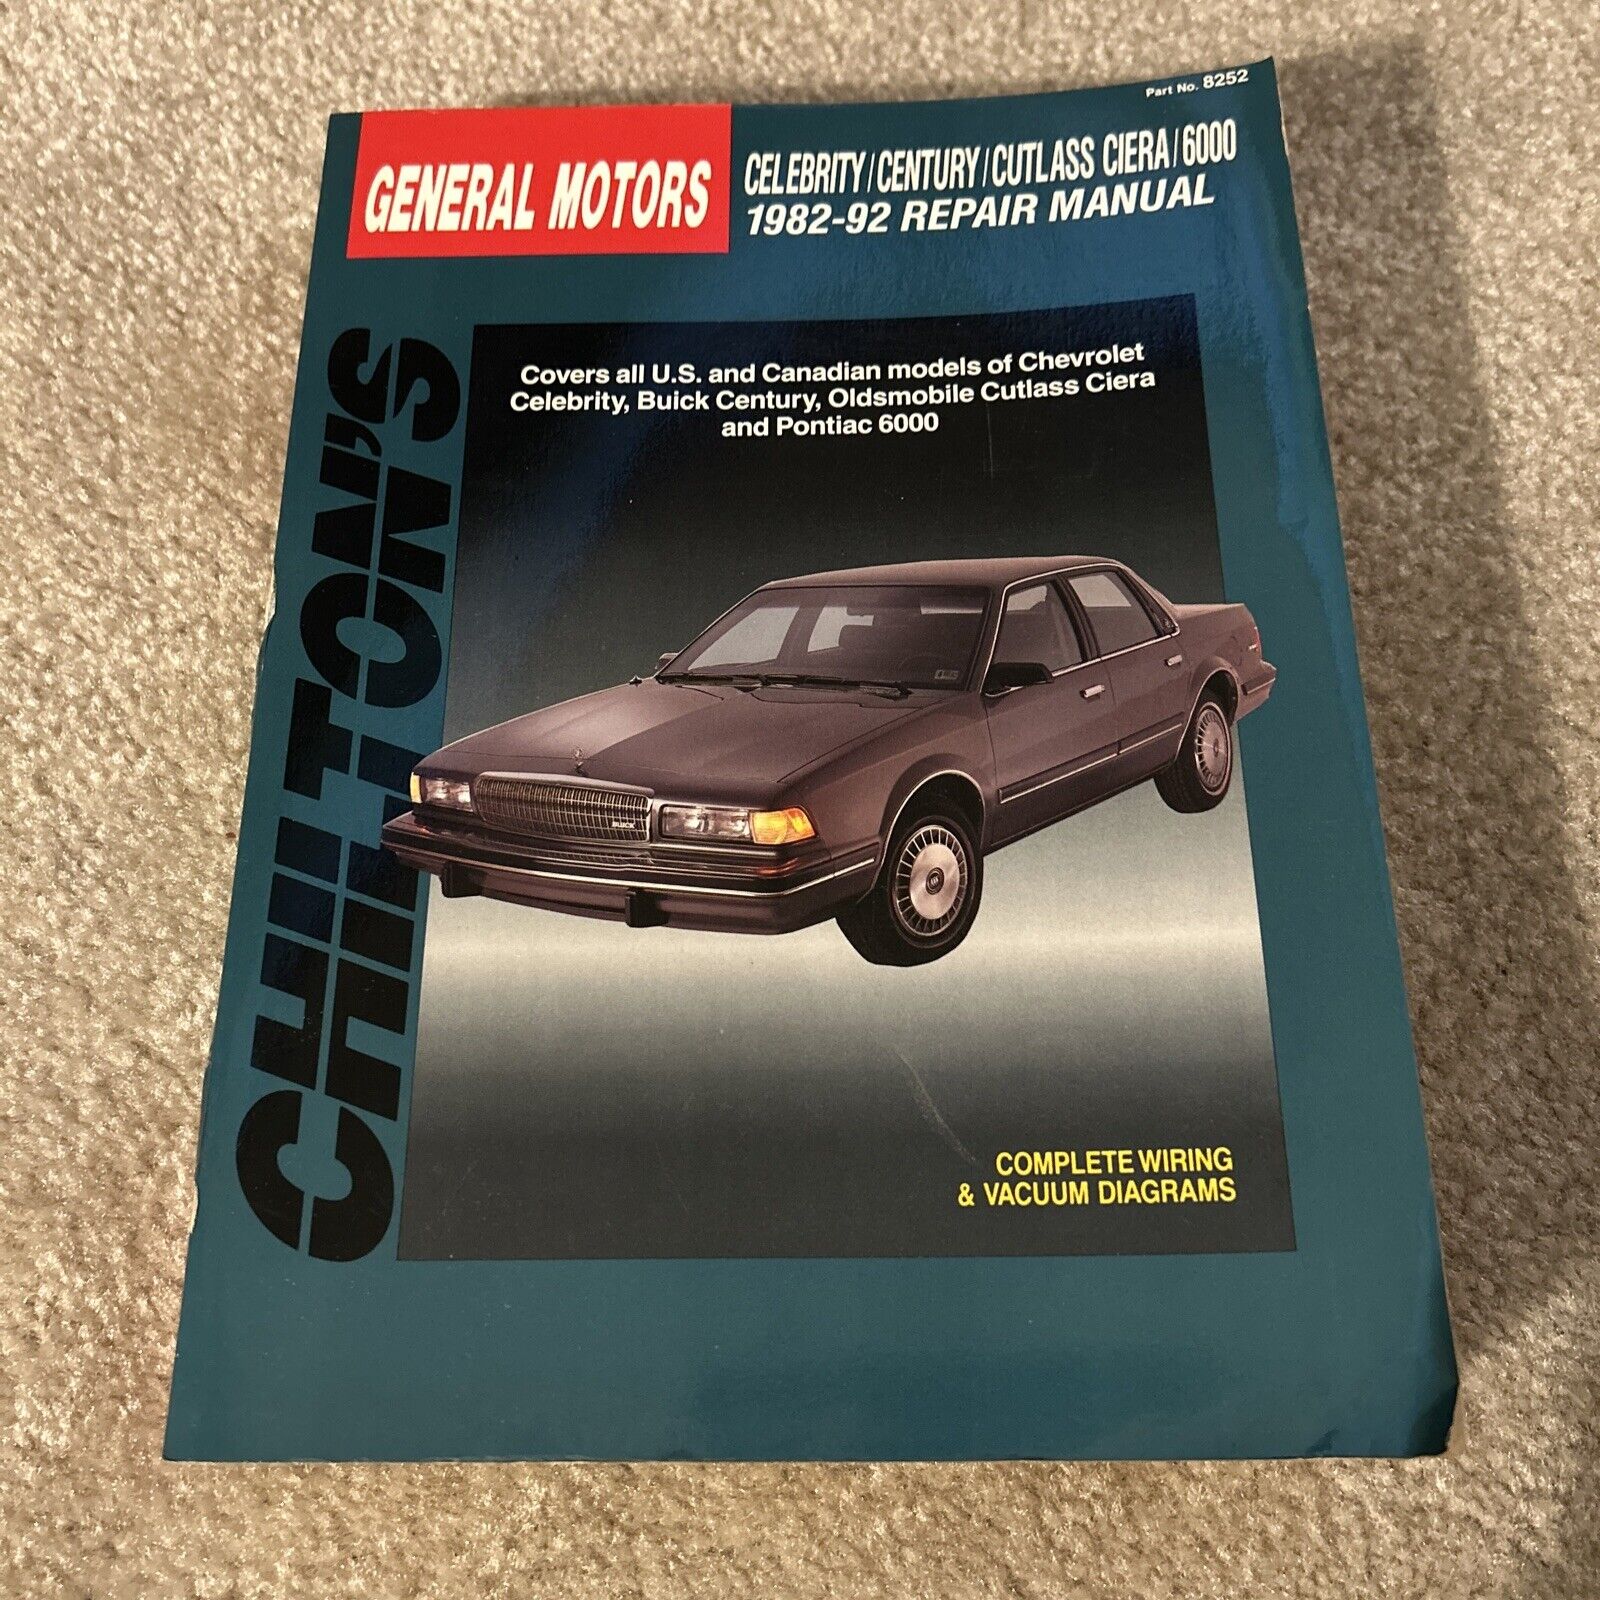 Chilton's General Motors Repair Manual 1982-92 Celebrity Century Cutlass Ciera